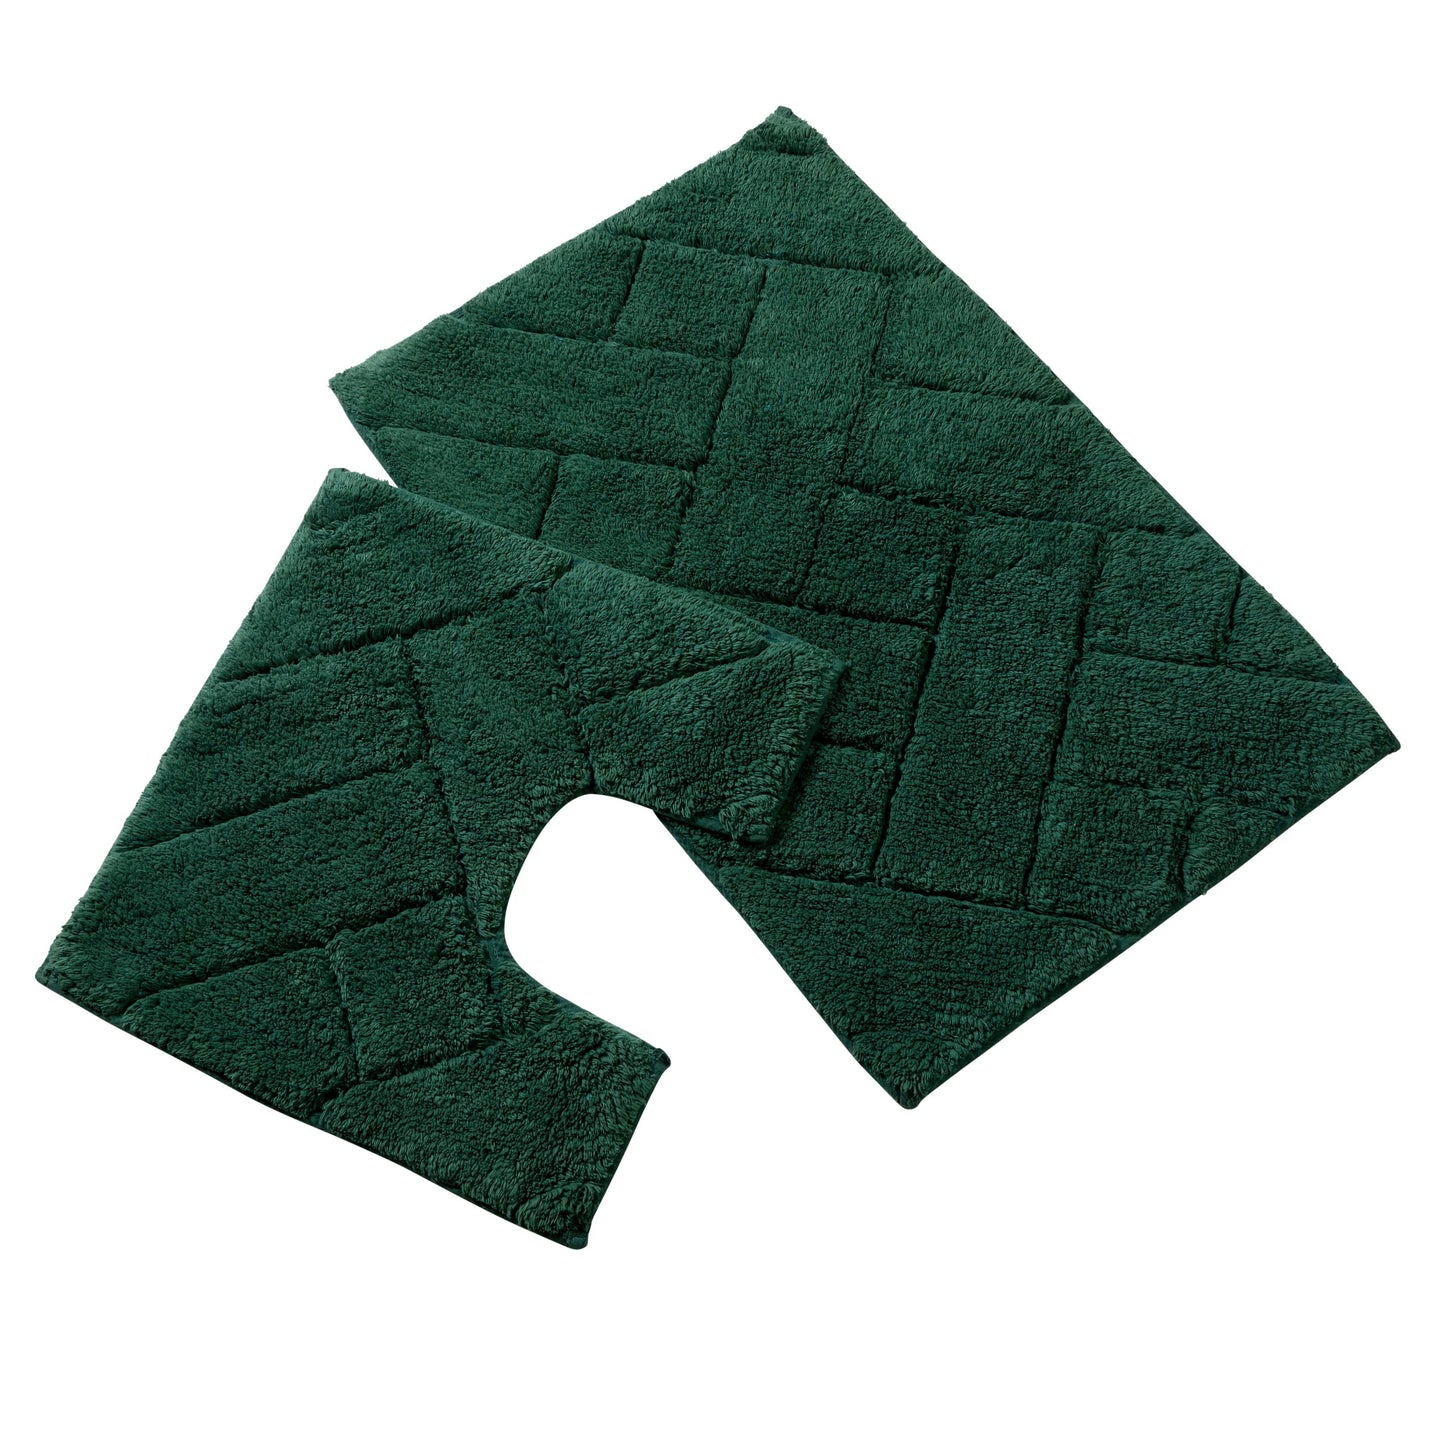 TOFTBO Bath mat - green 40x60 cm (16x24 )